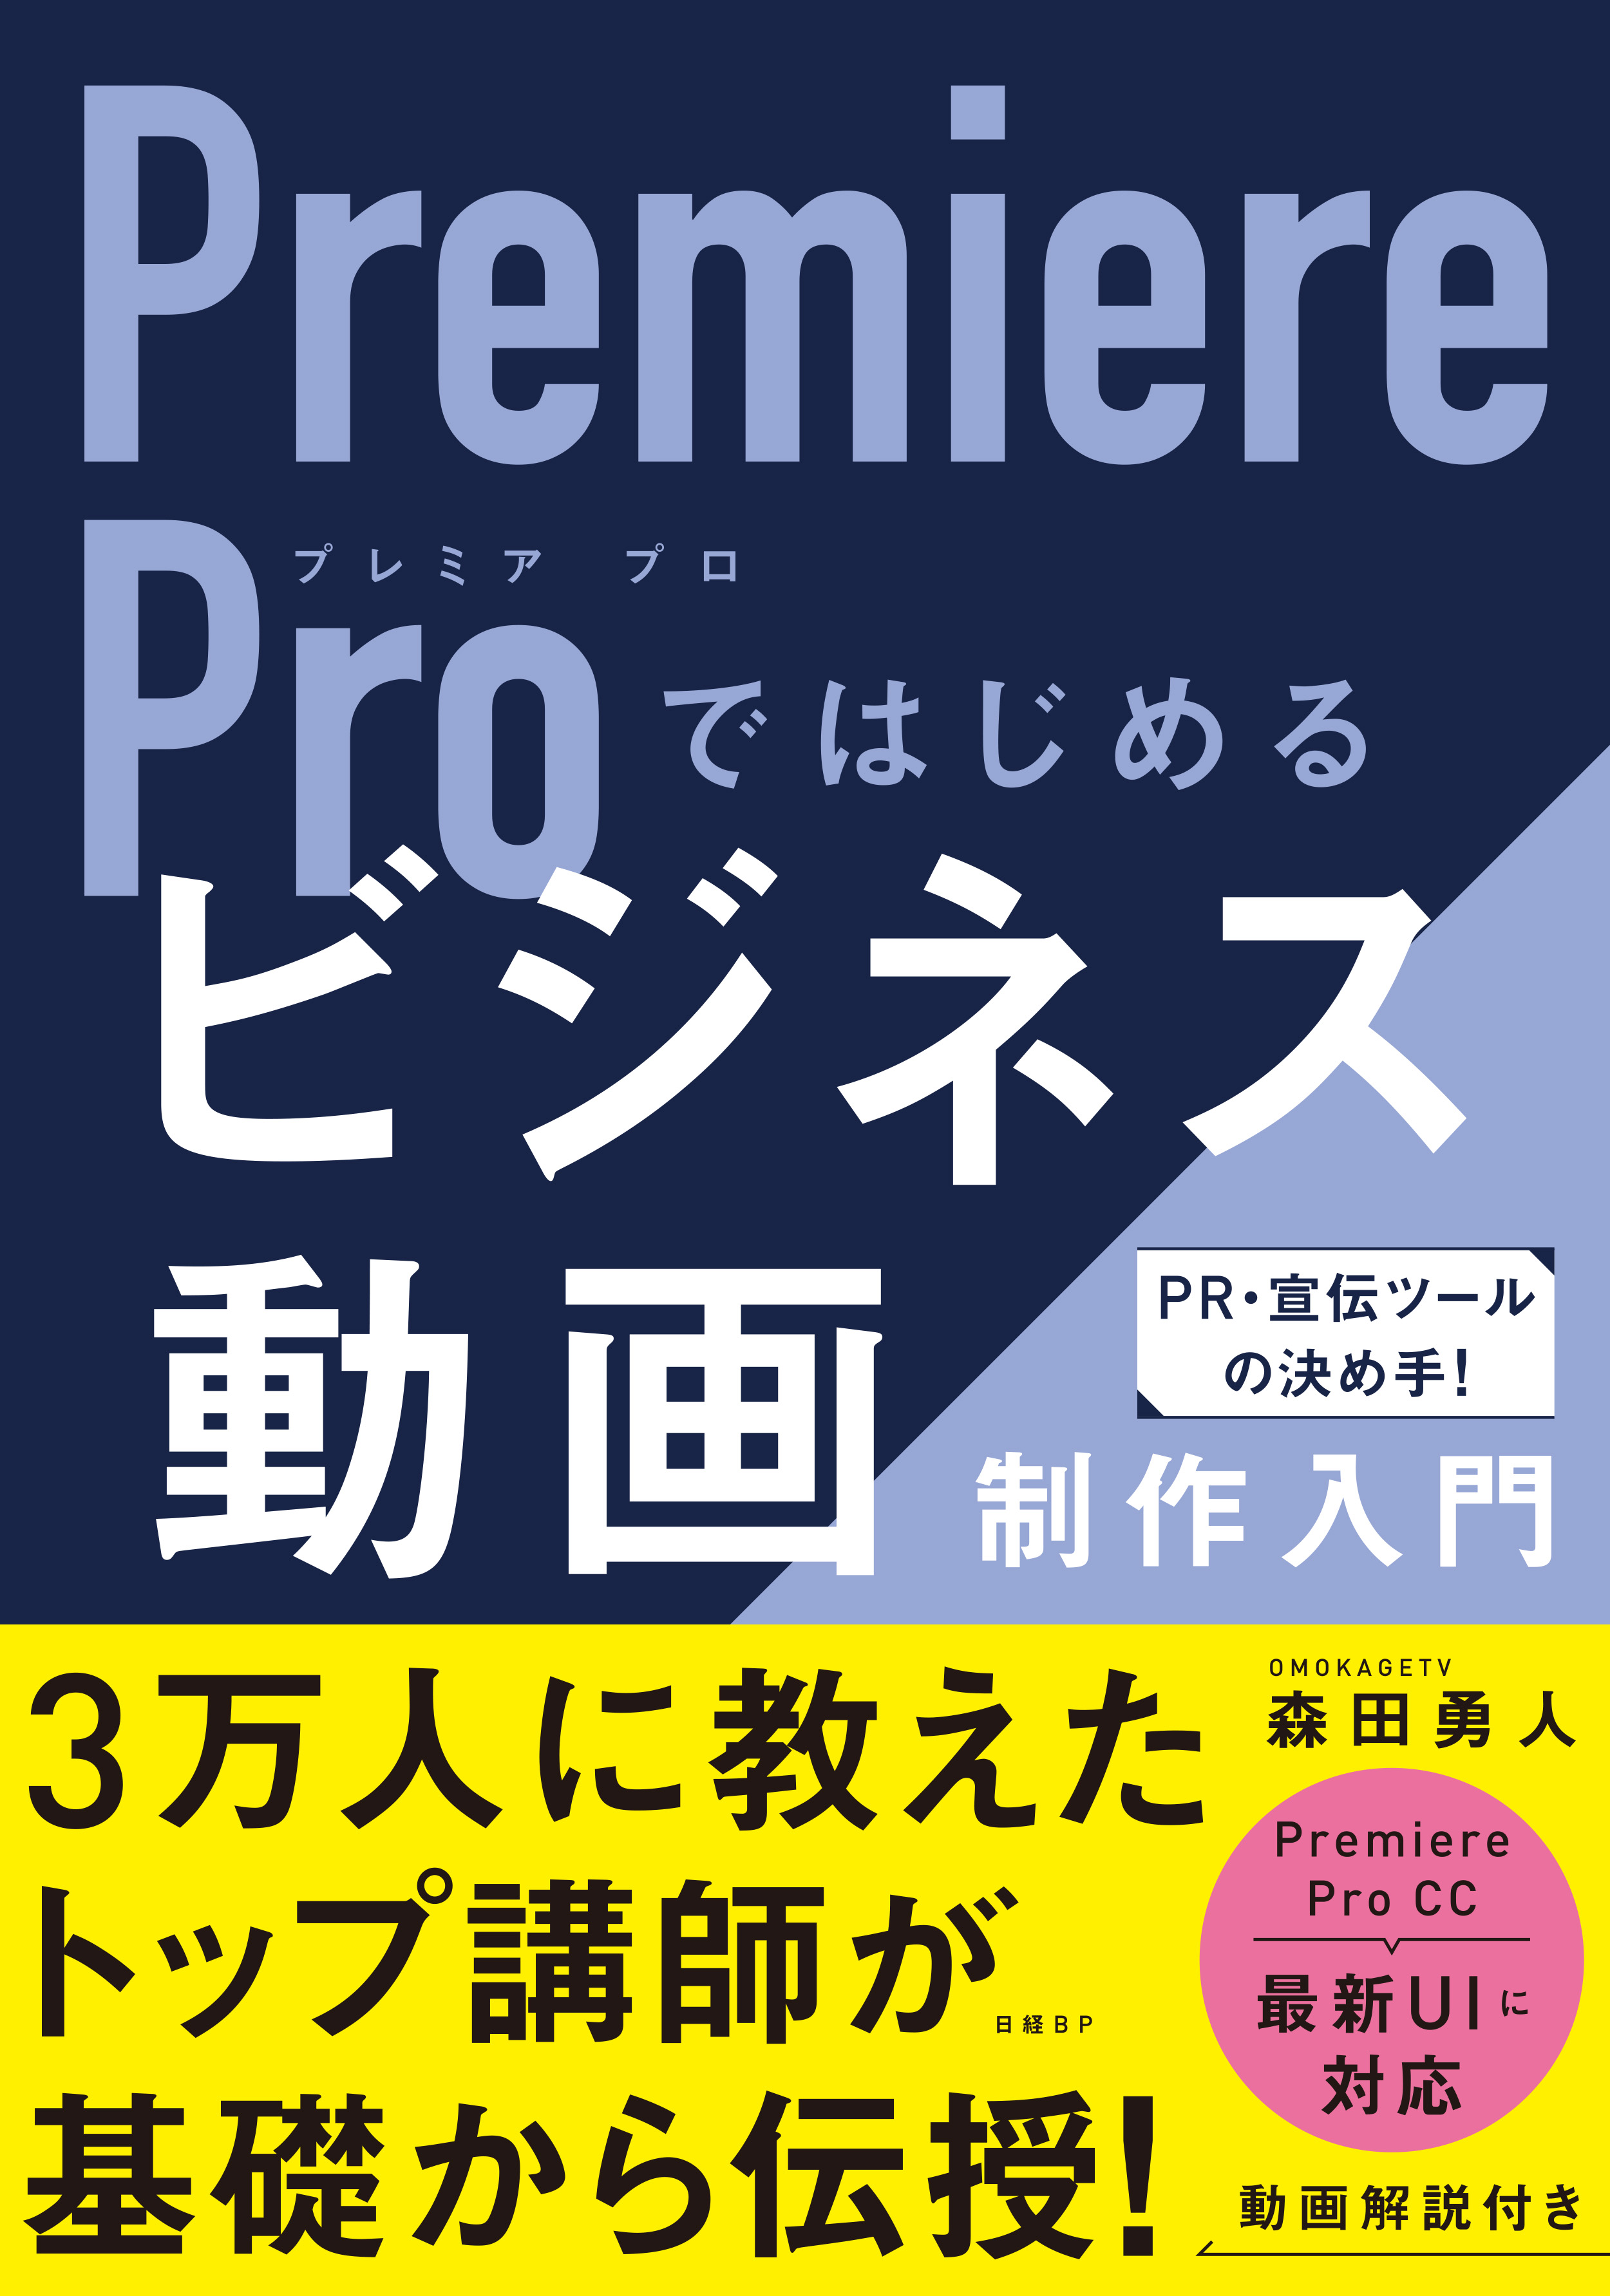 Premiere Proではじめるビジネス動画制作入門